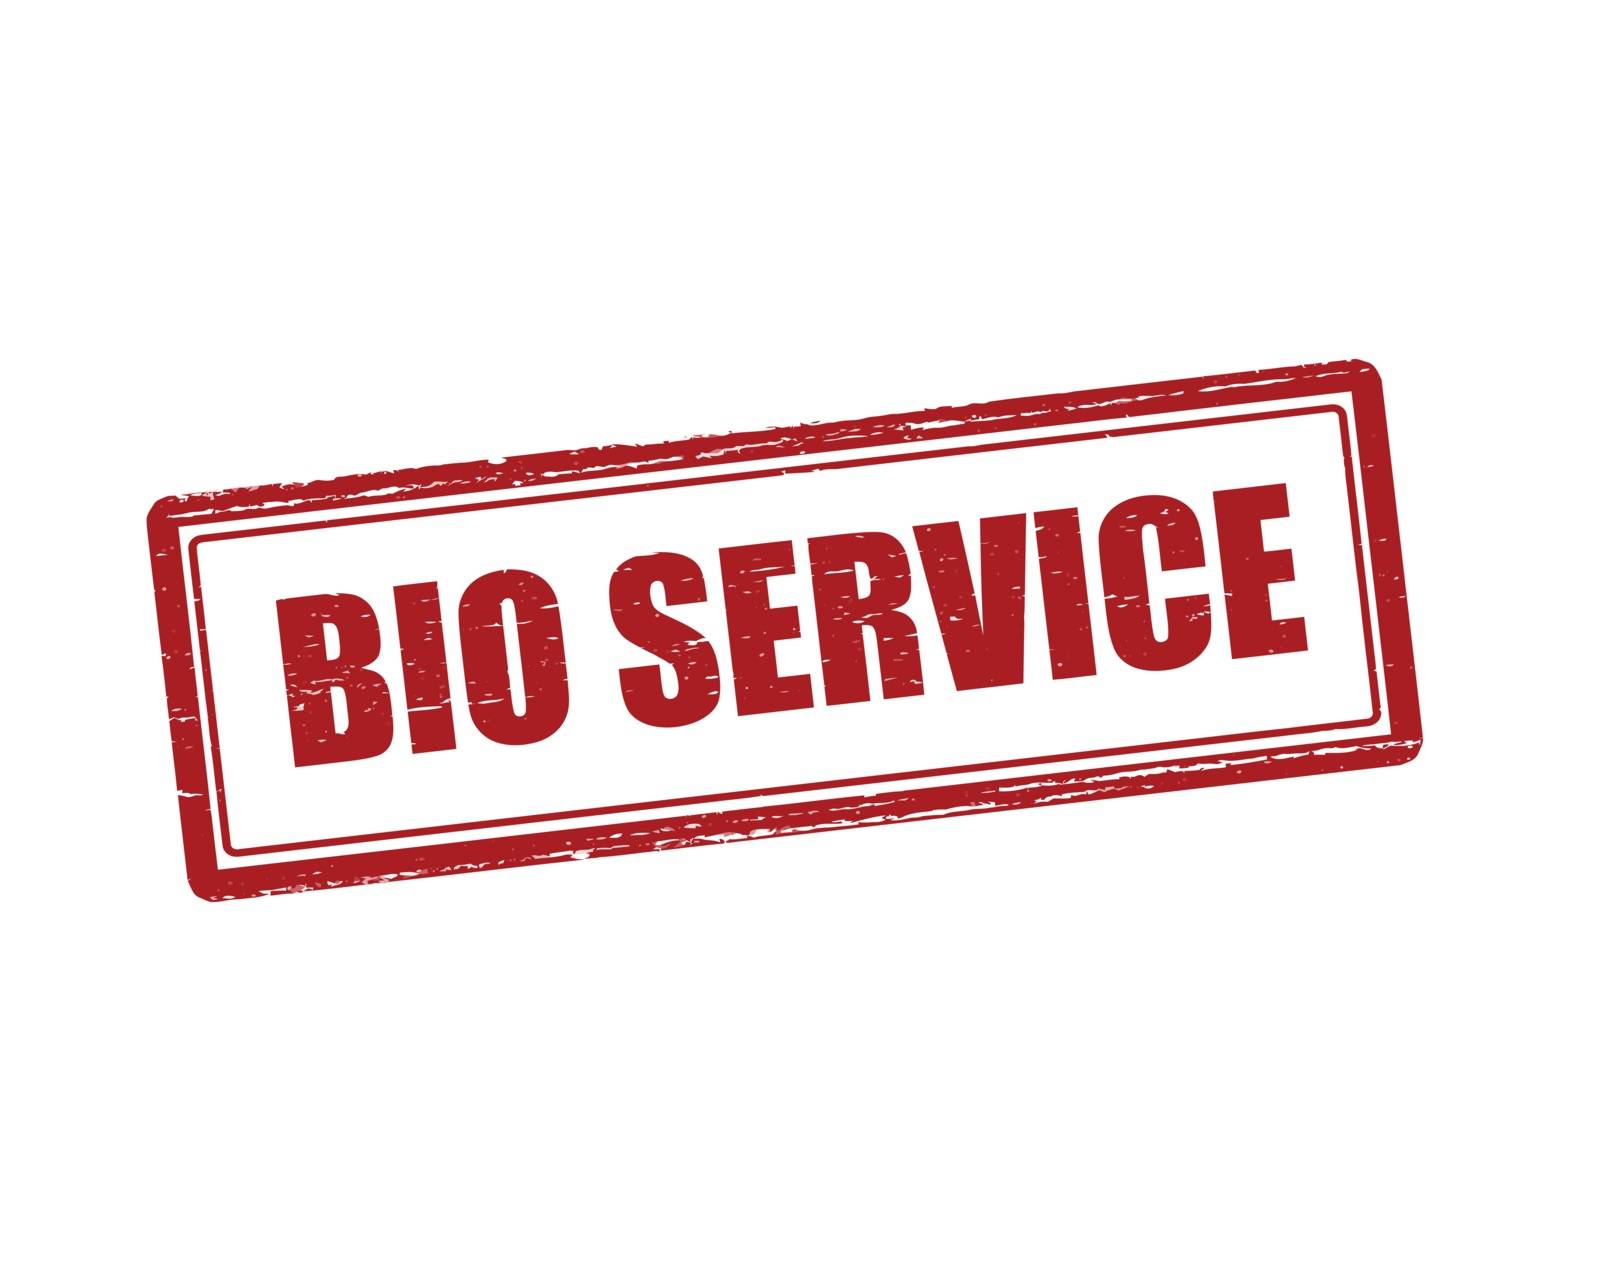 Bio service by carmenbobo